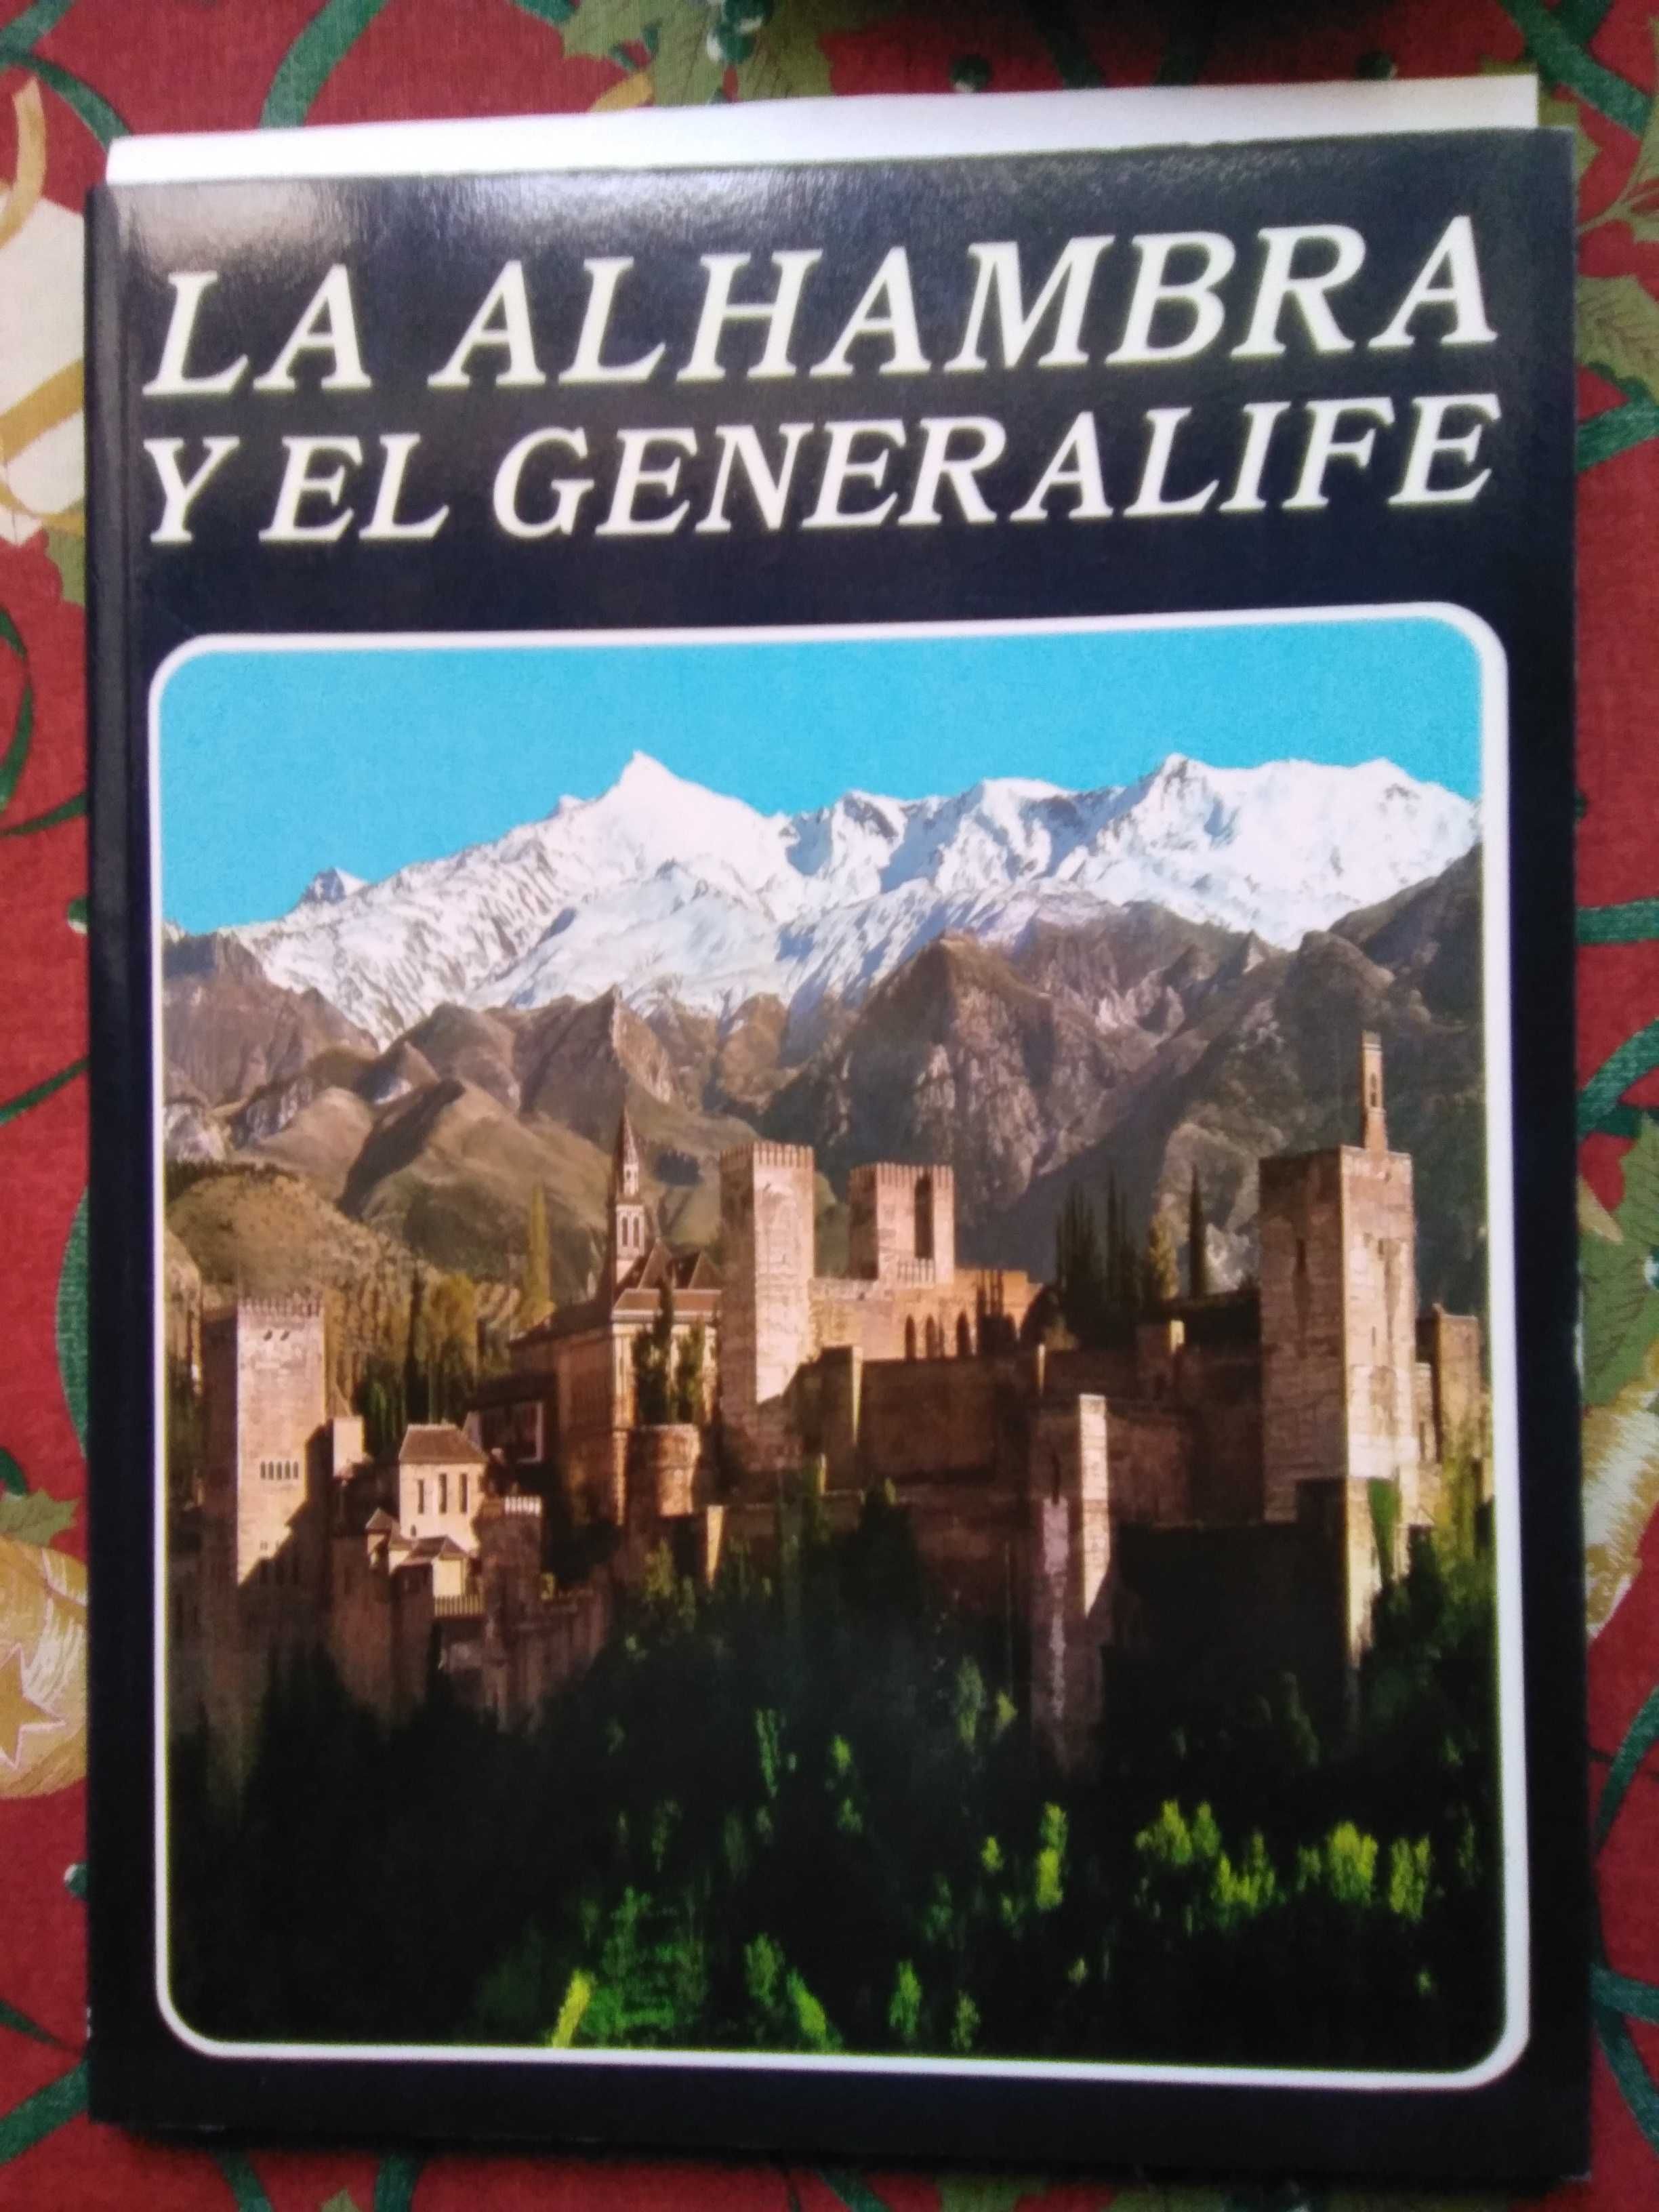 Alhambra e Generalife - Guia